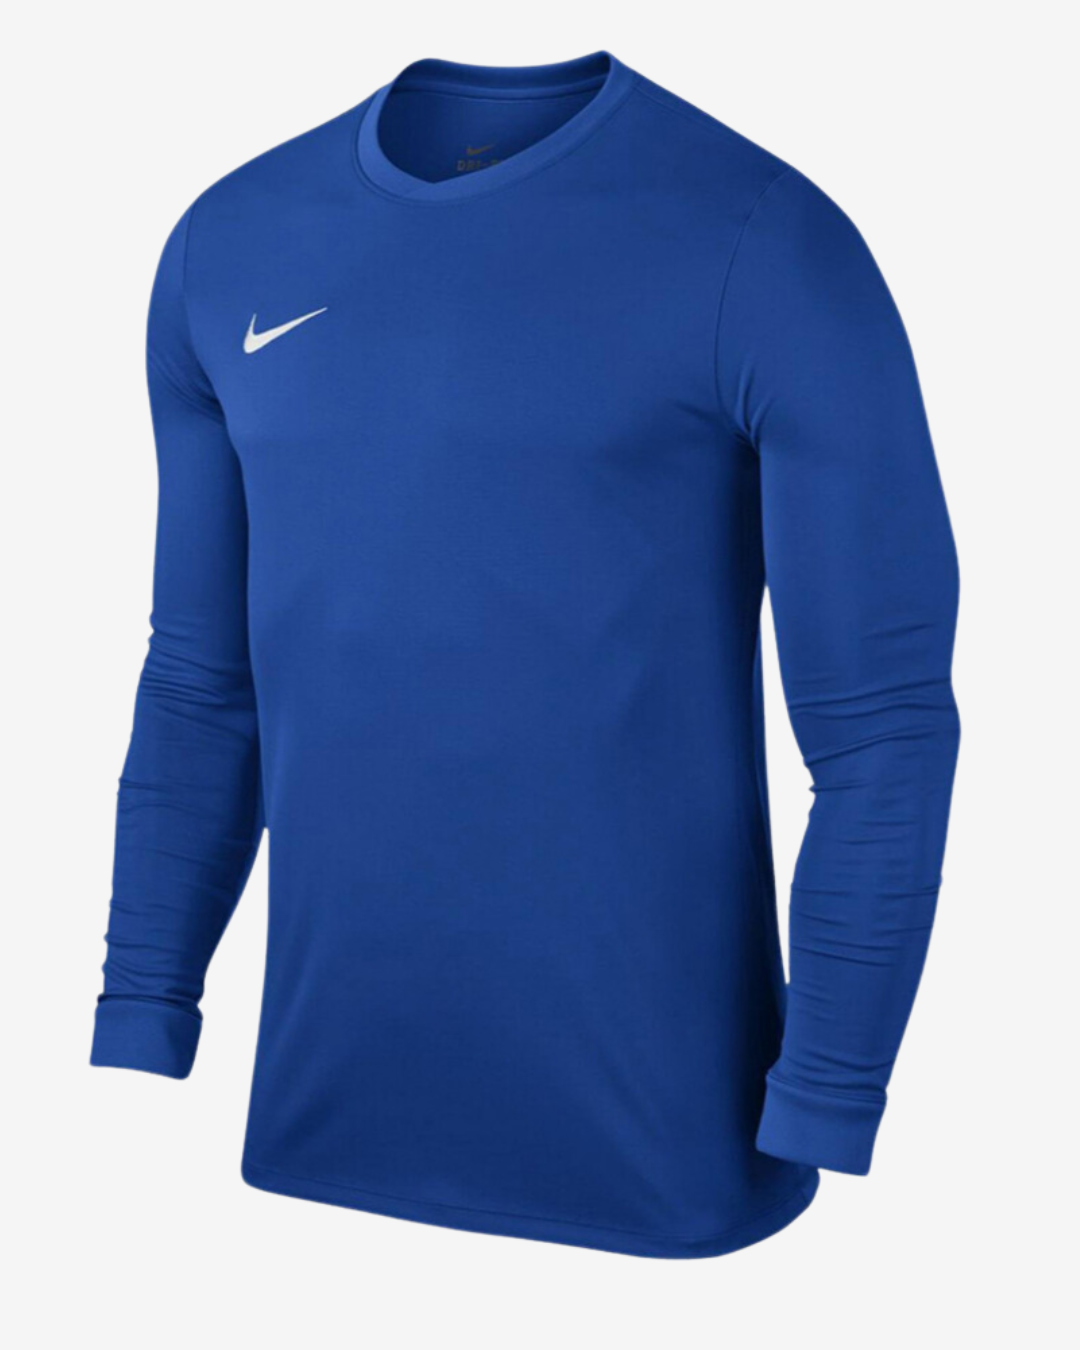 Nike Dri-fit park 7 langærmet t-shirt - Blå - Str. M - Modish.dk